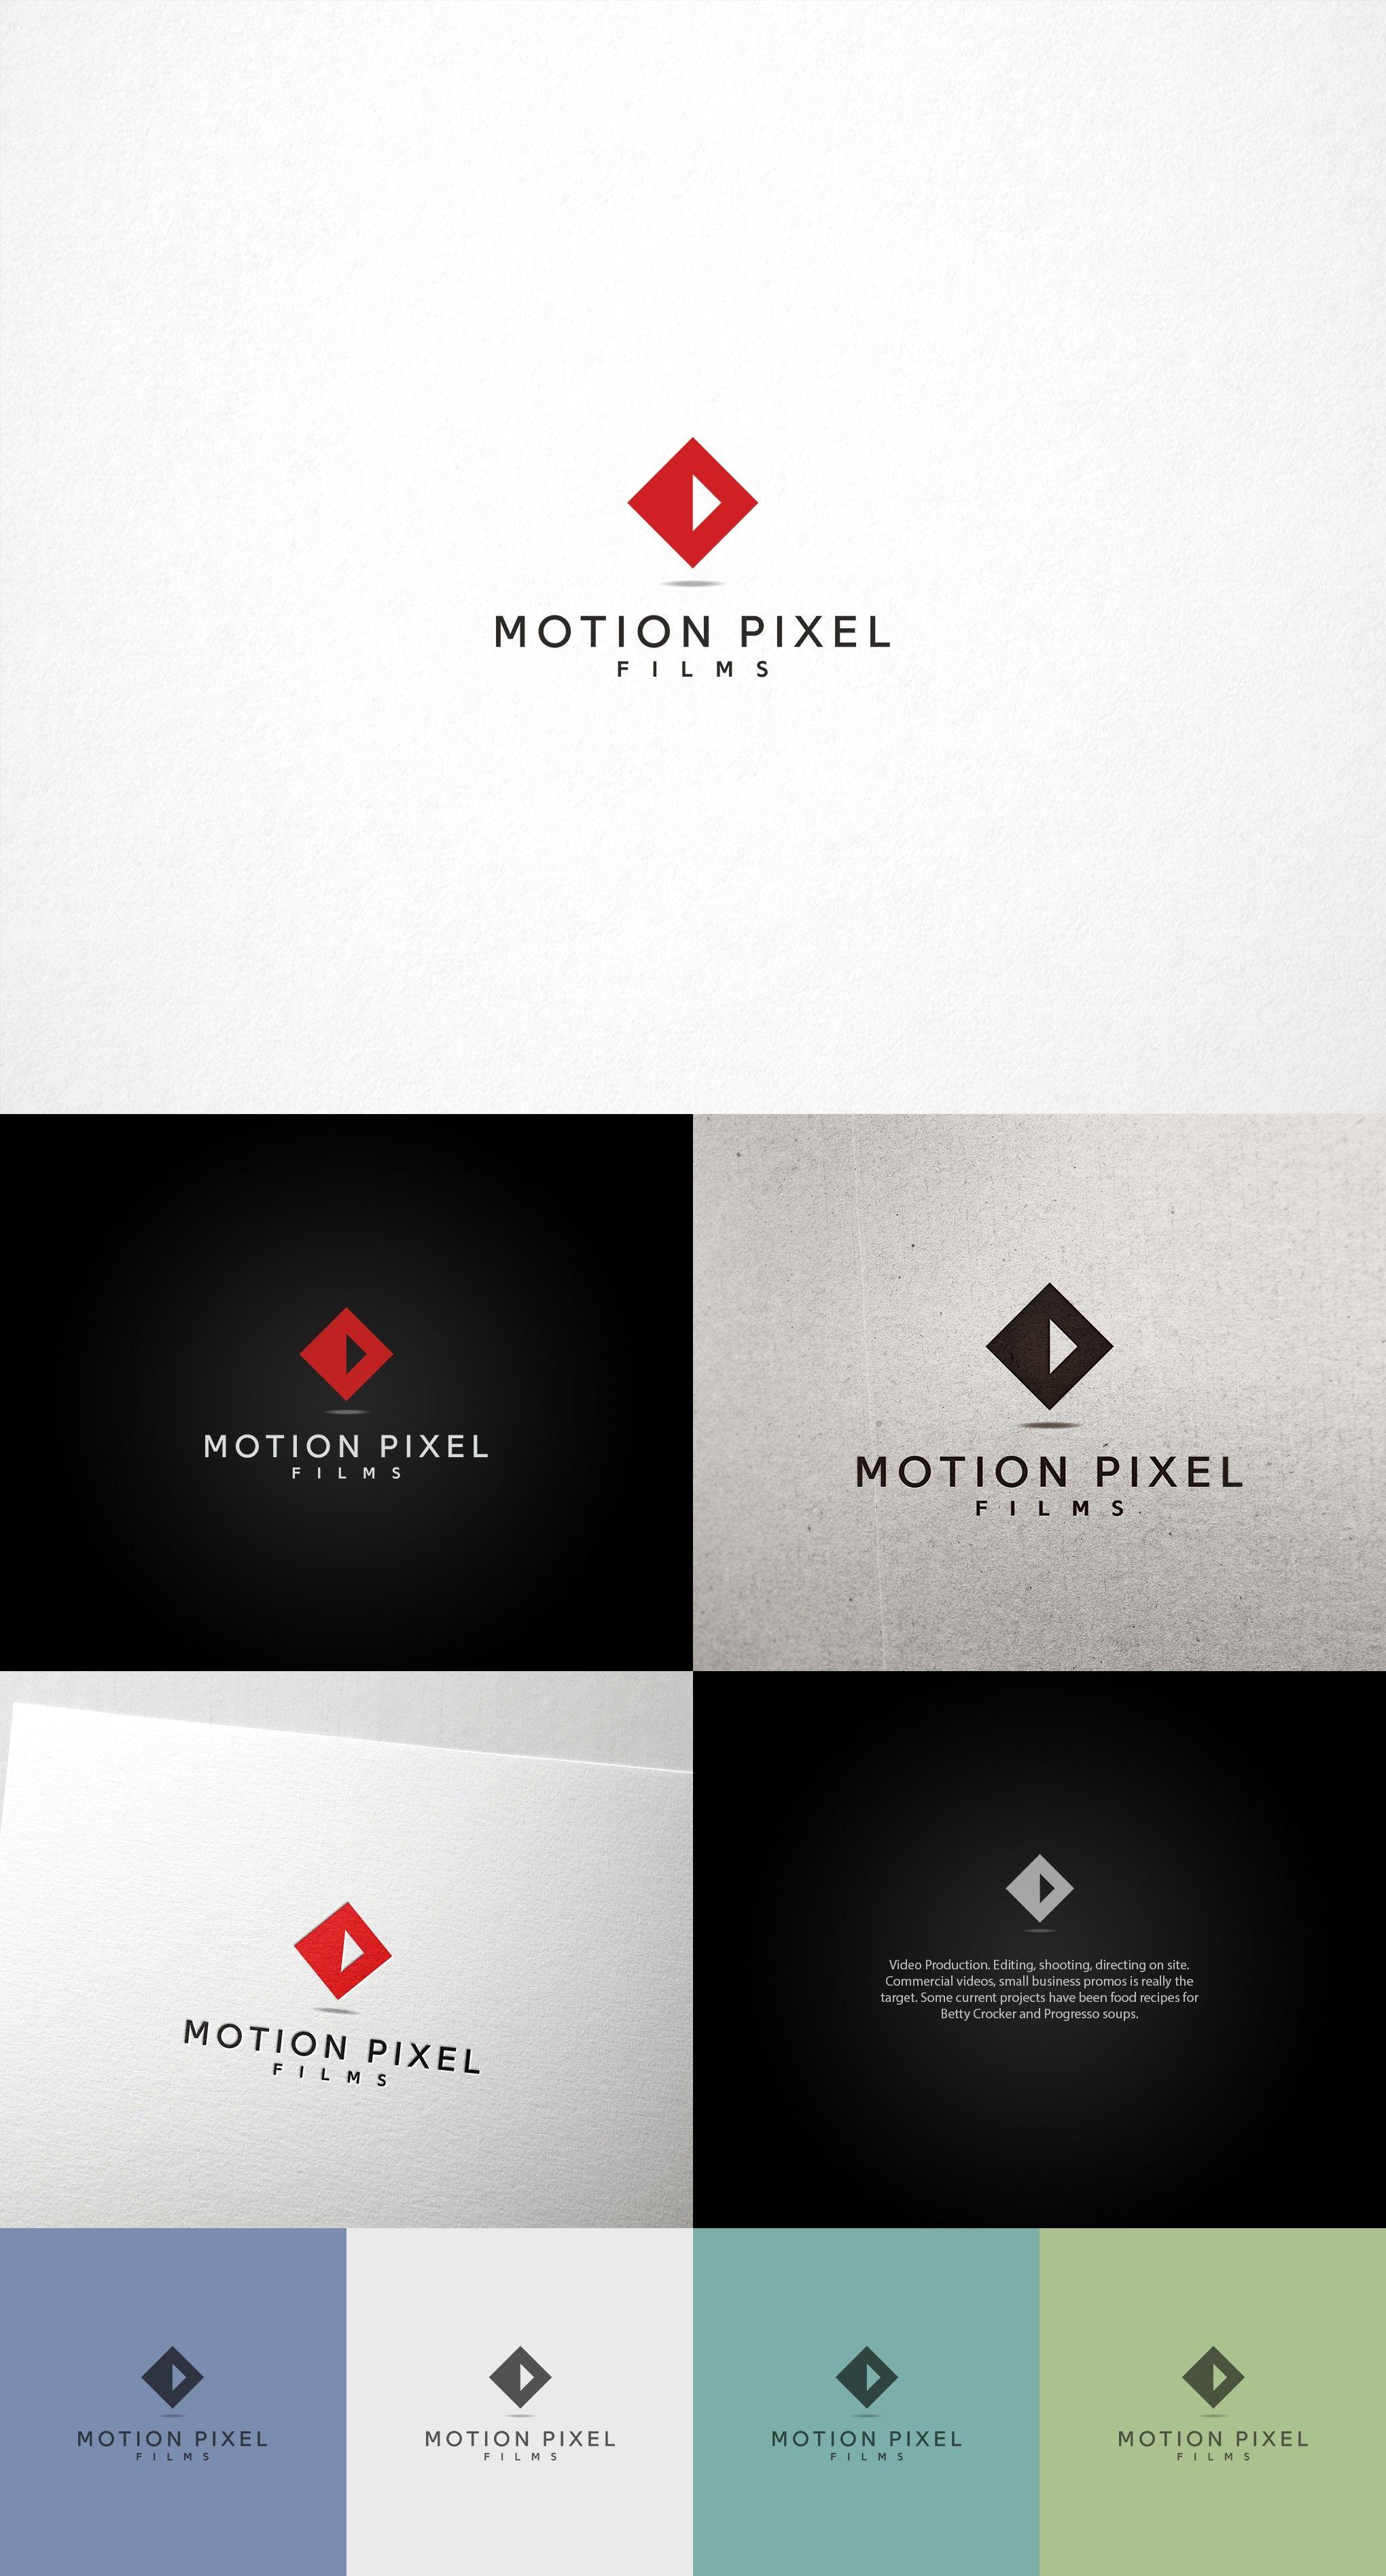 Small Sharp Logo - Modern, simple and sharp logo for Motion Pixel Filmsdesigns